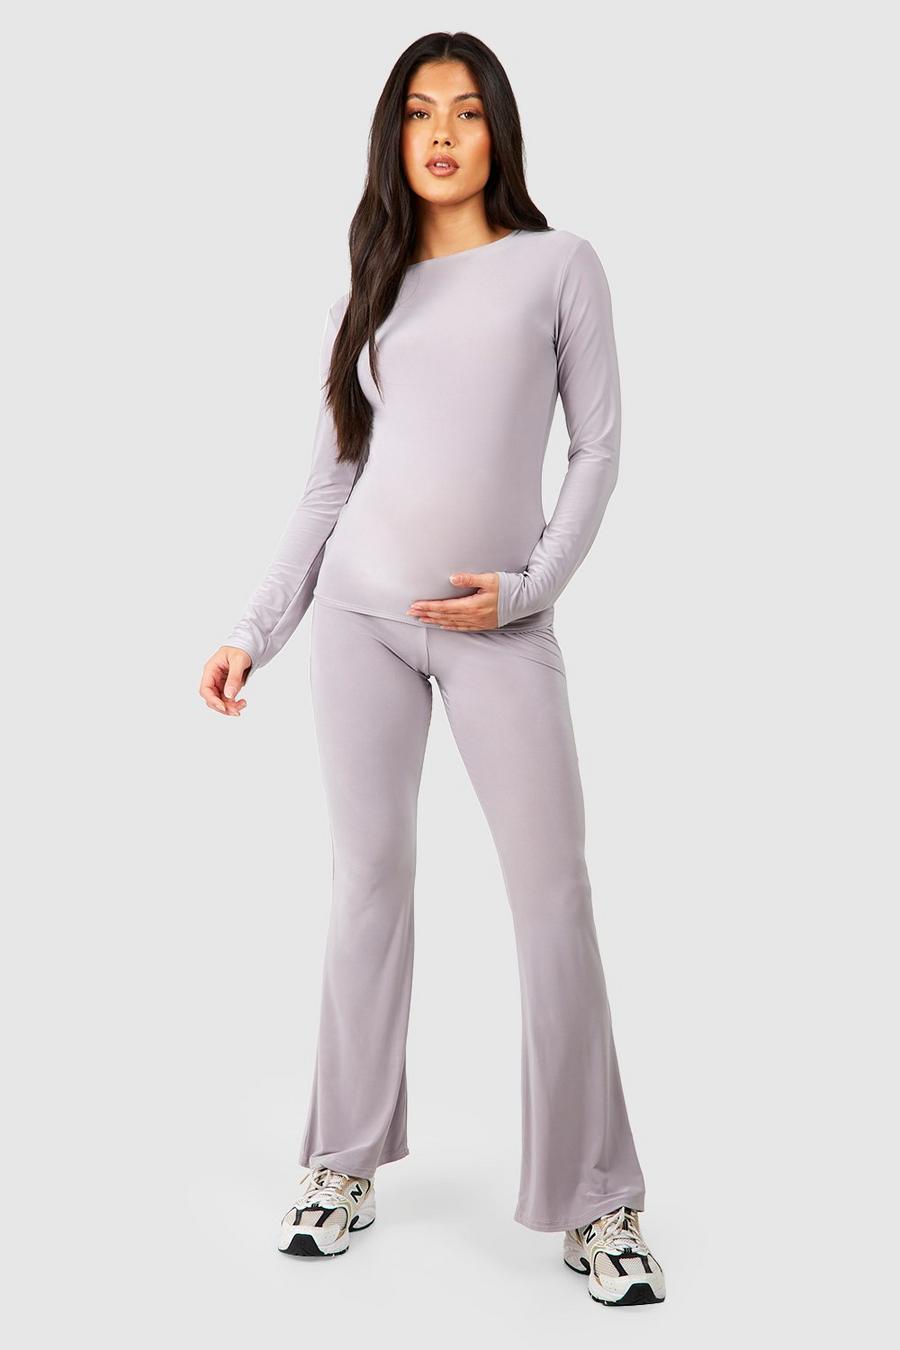 Grey marl Maternity Soft Touch Yoga Pant Loungewear Set